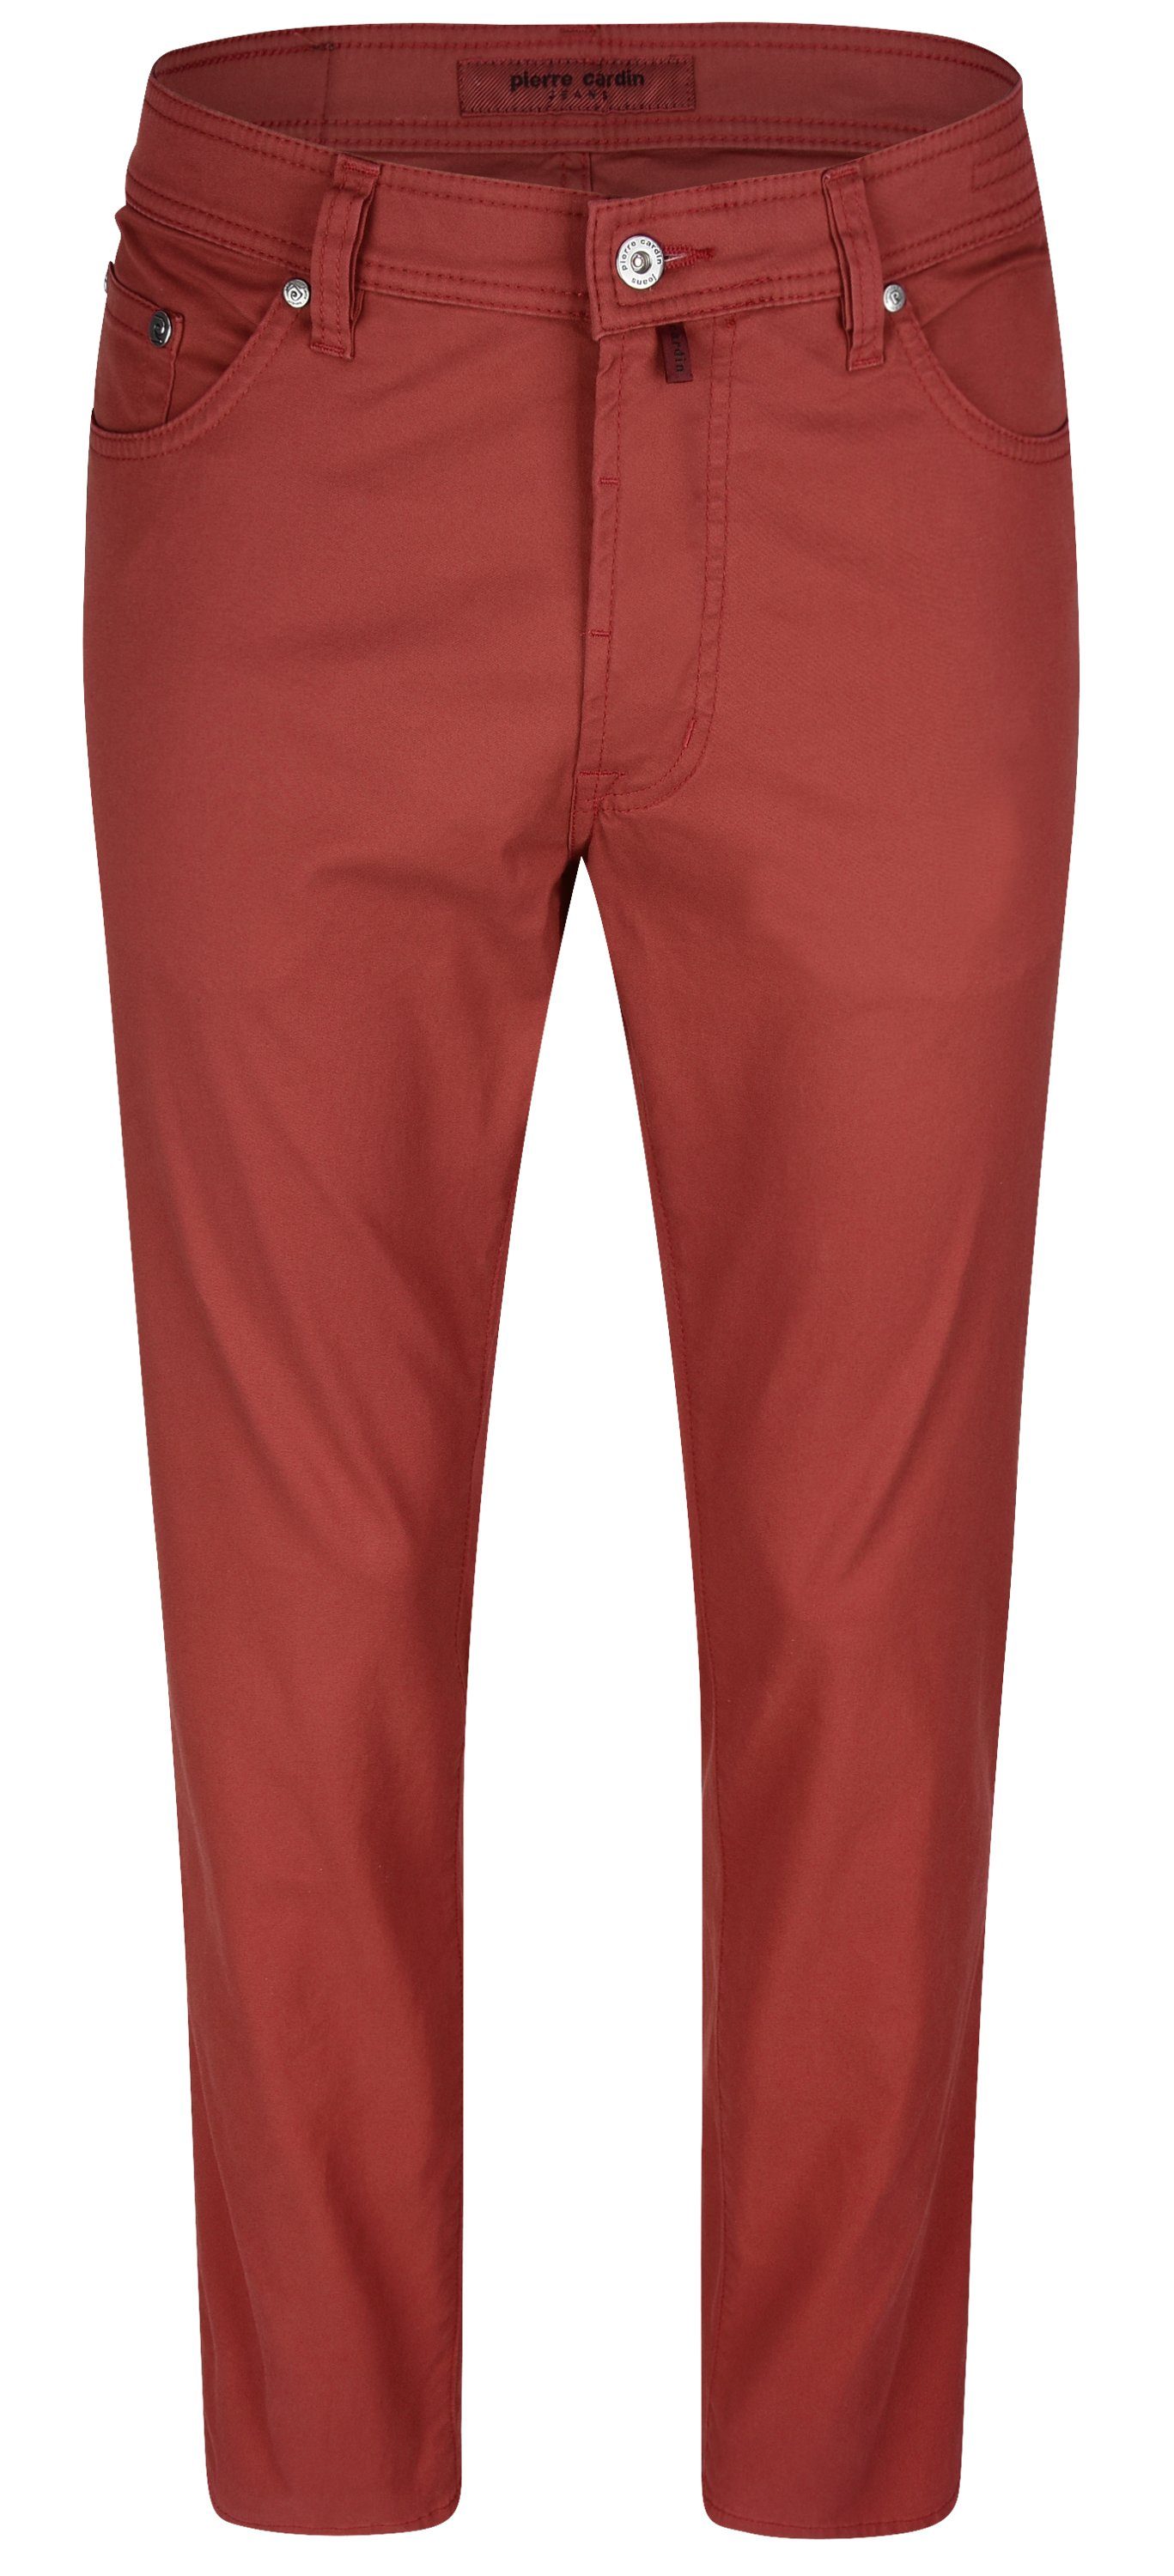 DEAUVILLE Pierre 5-Pocket-Jeans red touch Cardin - 250.92 PIERRE popeline 3196 summer air CARDIN